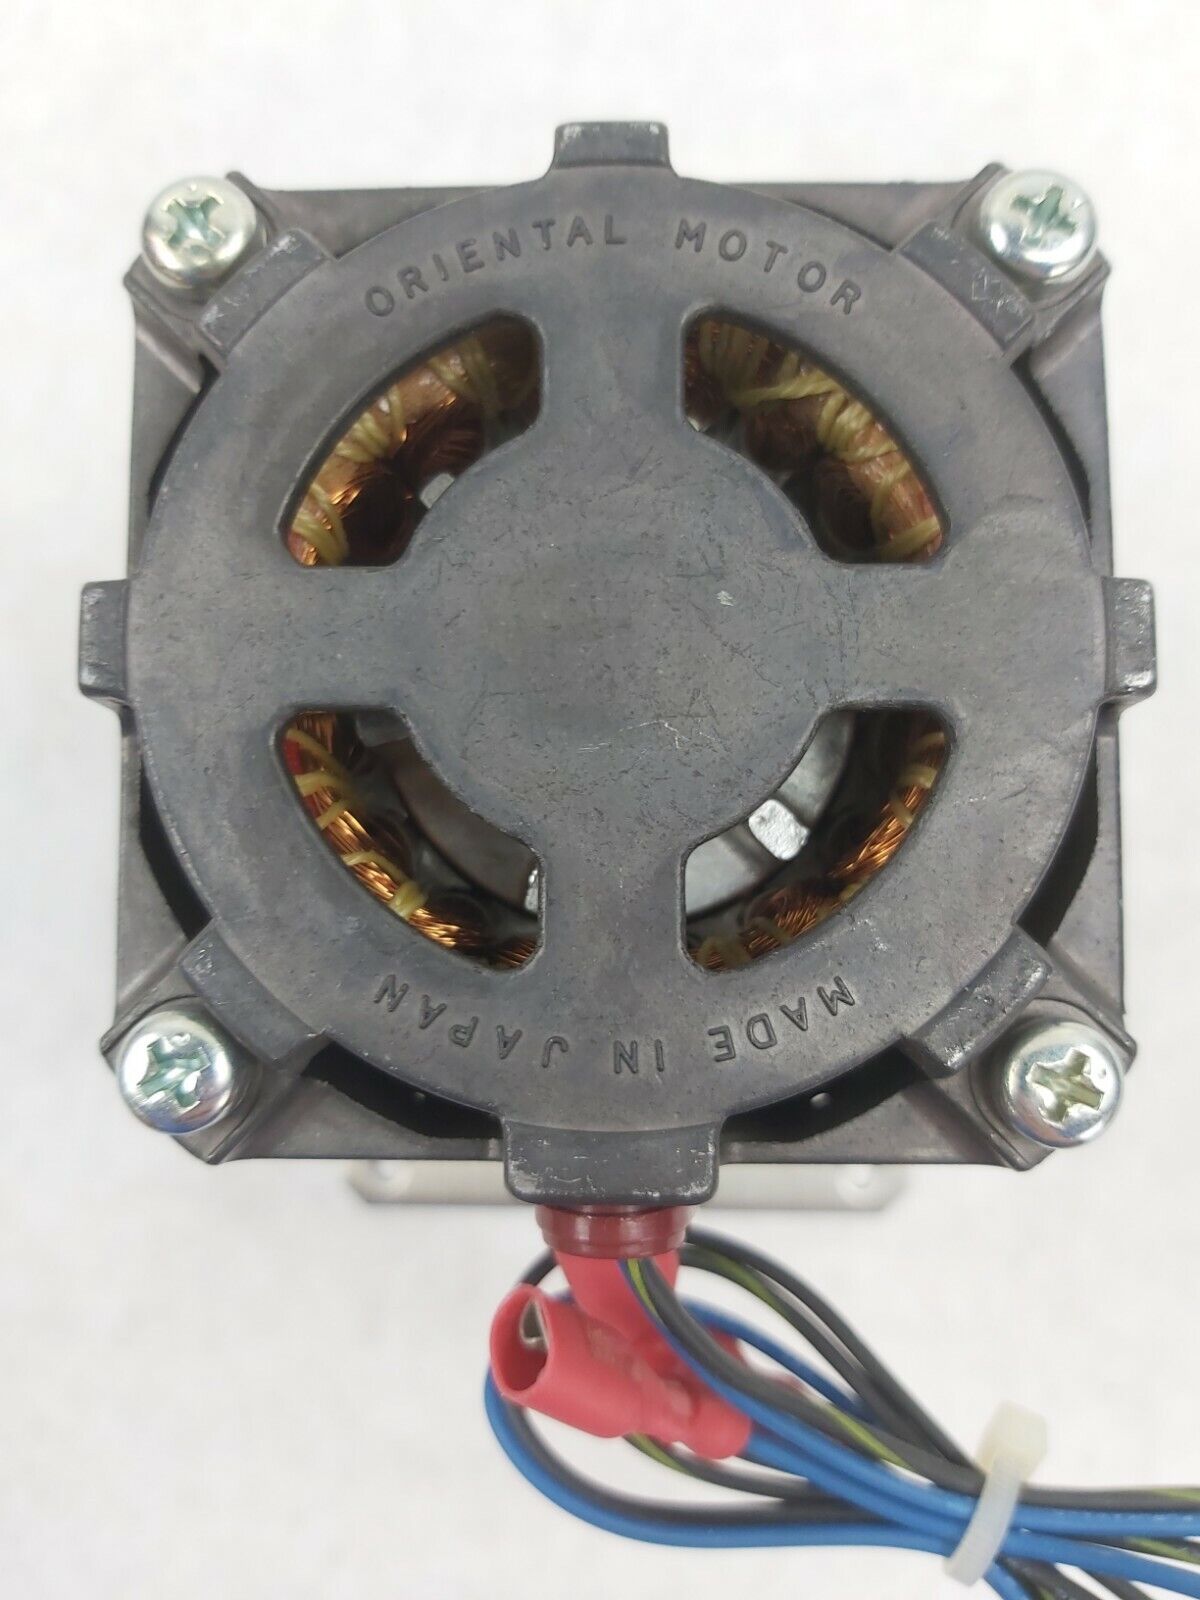 Oriental Motor Co. S-301 Reaction Motor w/ Magnet Wheel and Installment Frame